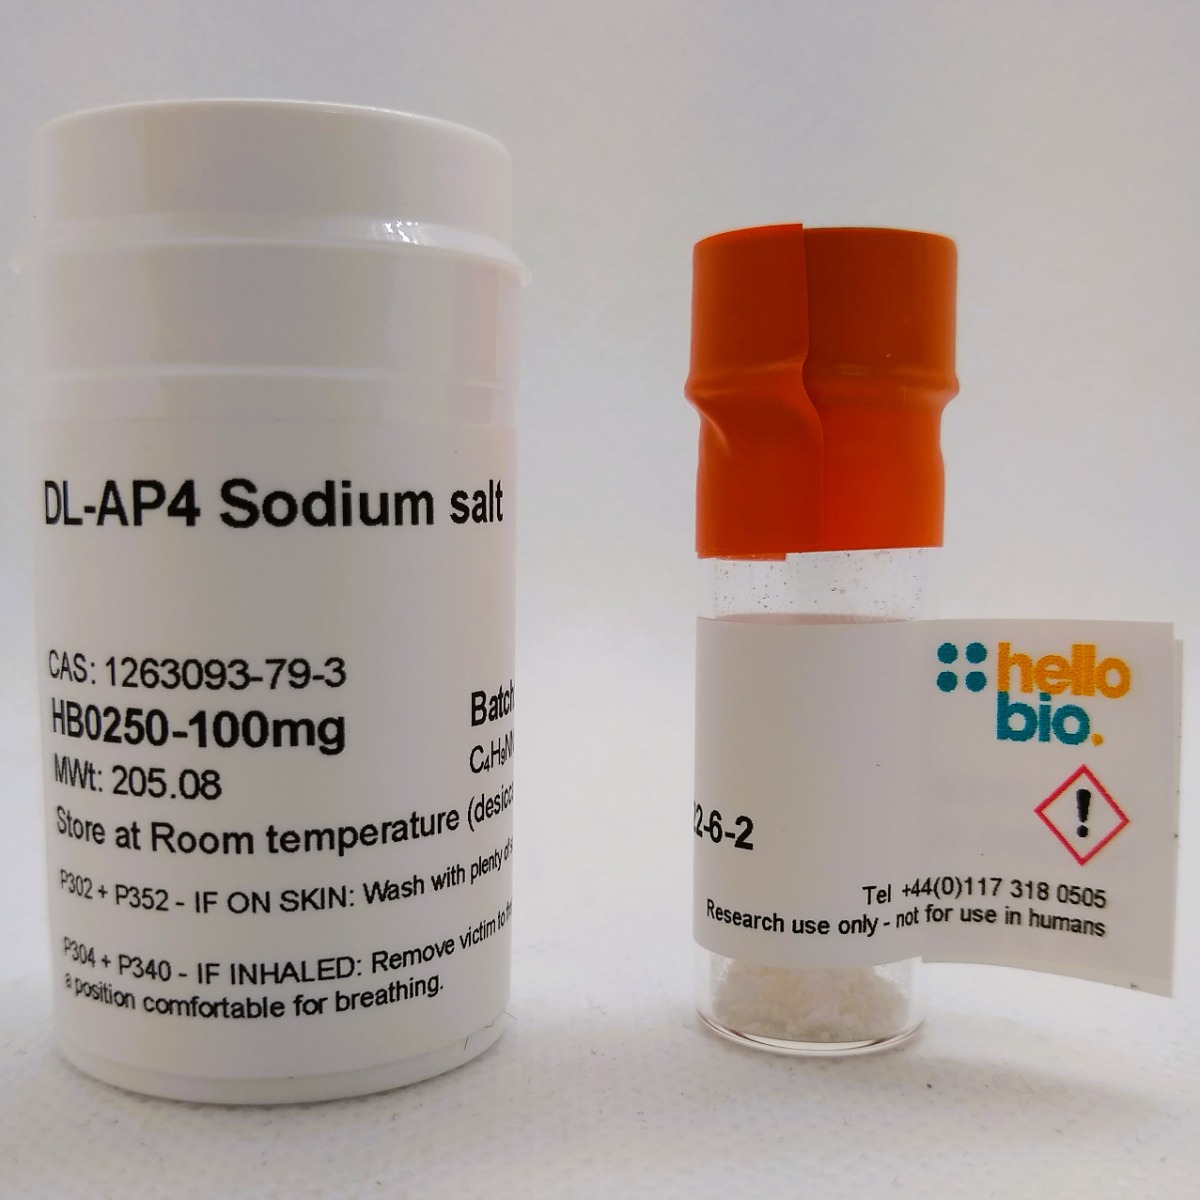 DL-AP4 Sodium salt product vial image | Hello Bio